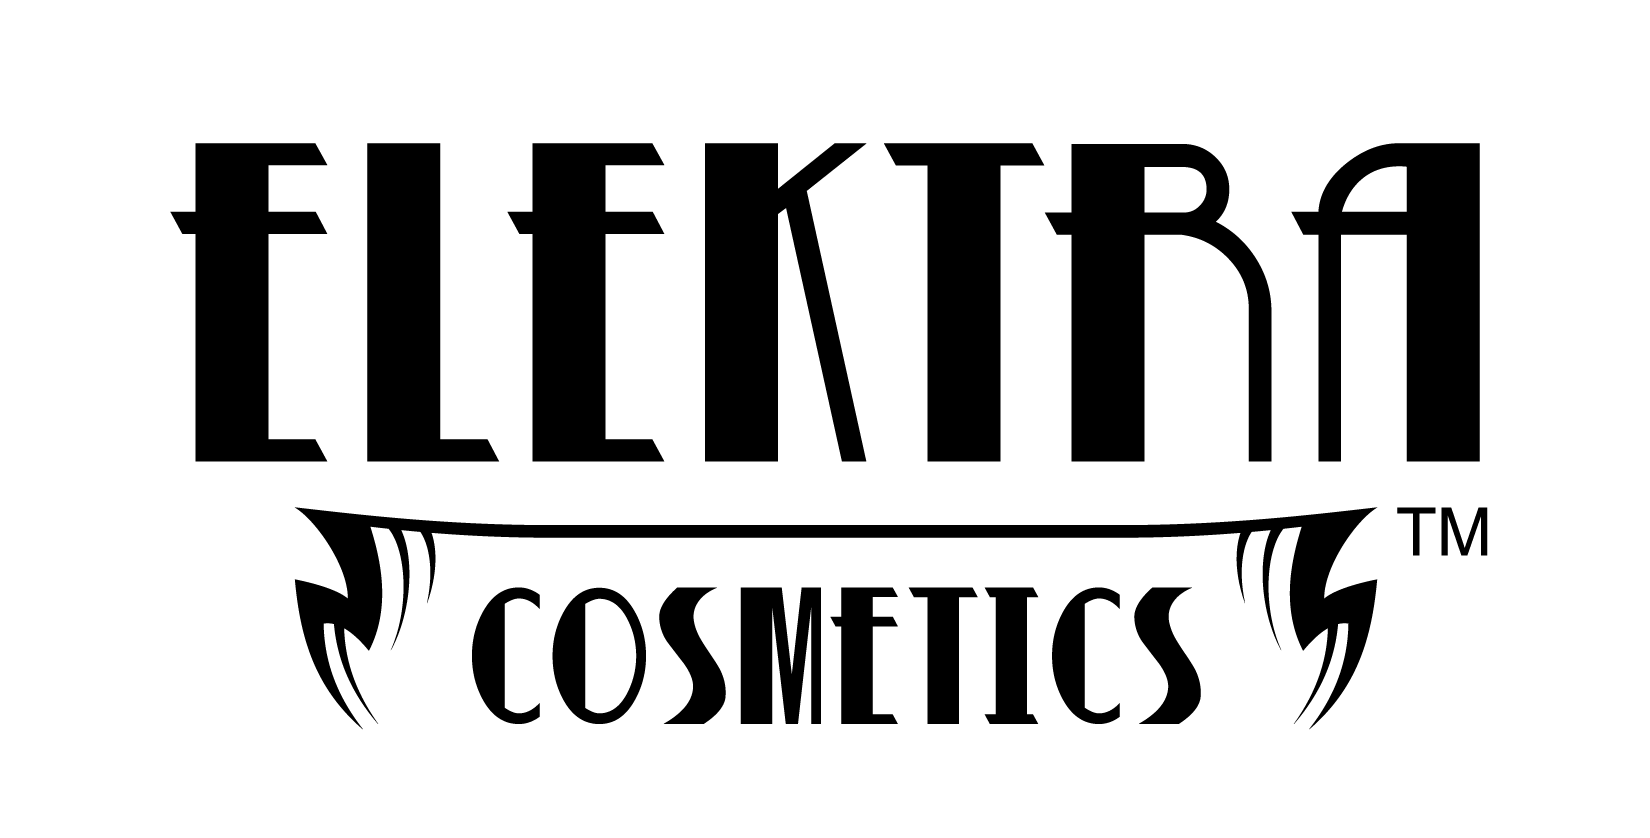 Elektra Cosmetics Wholesale